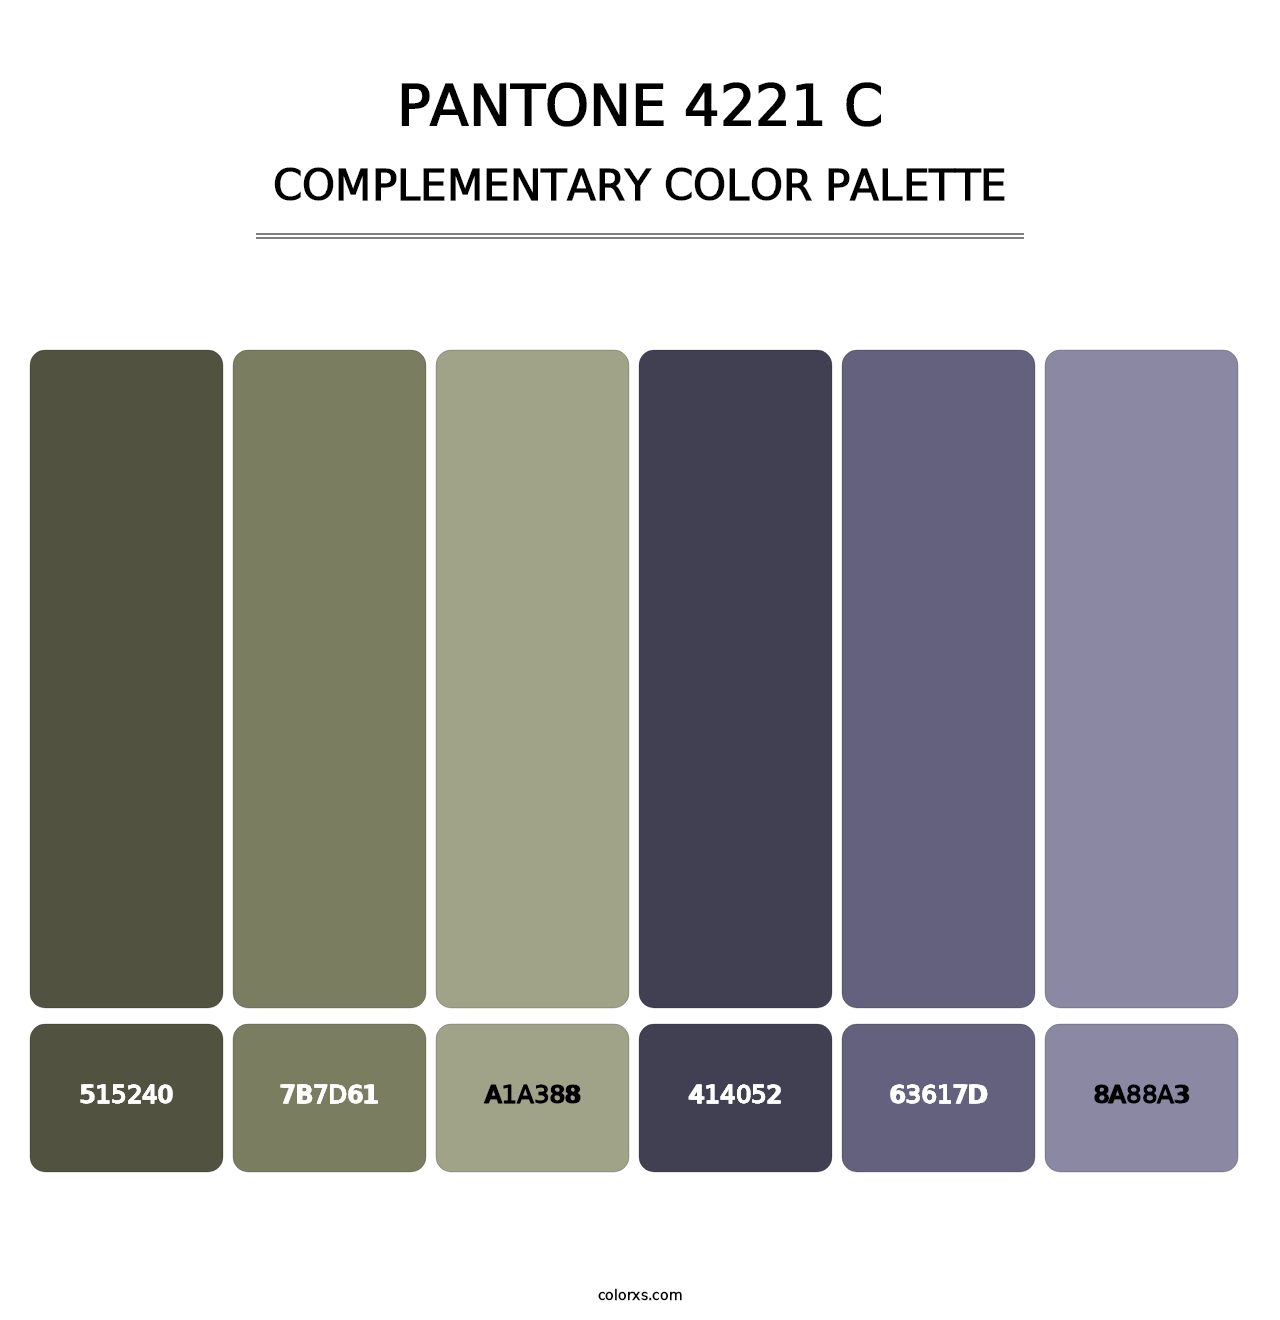 PANTONE 4221 C - Complementary Color Palette